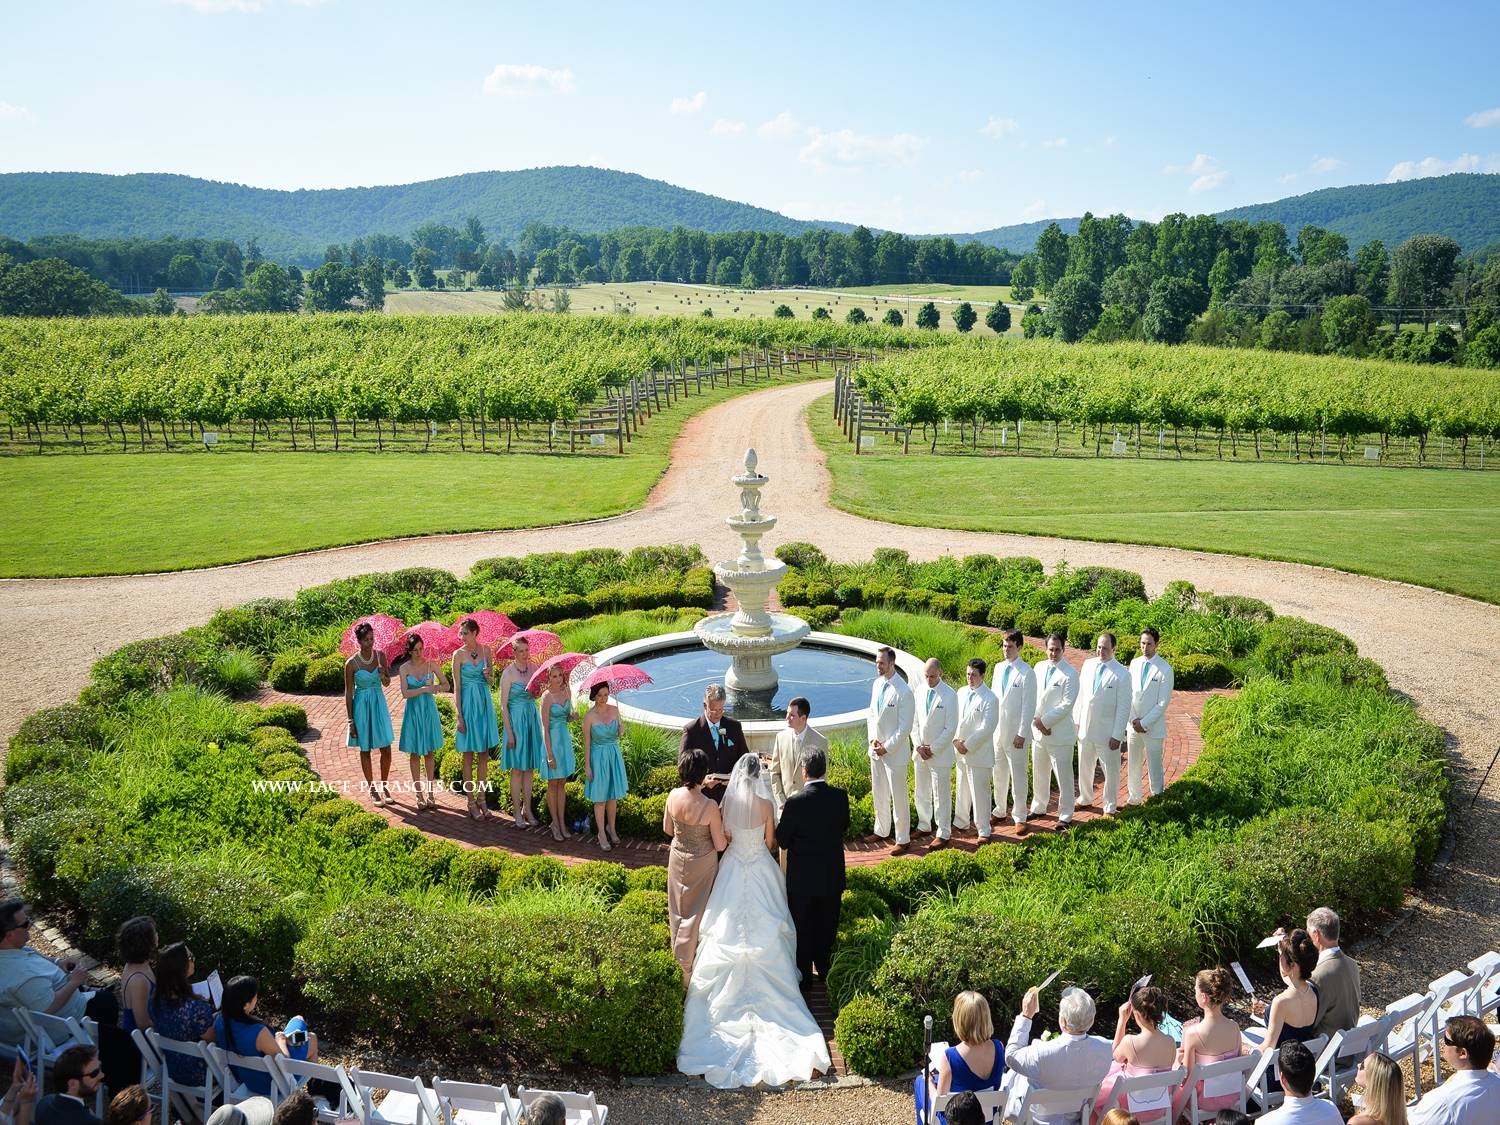 Lace Parasols at vinyard wedding